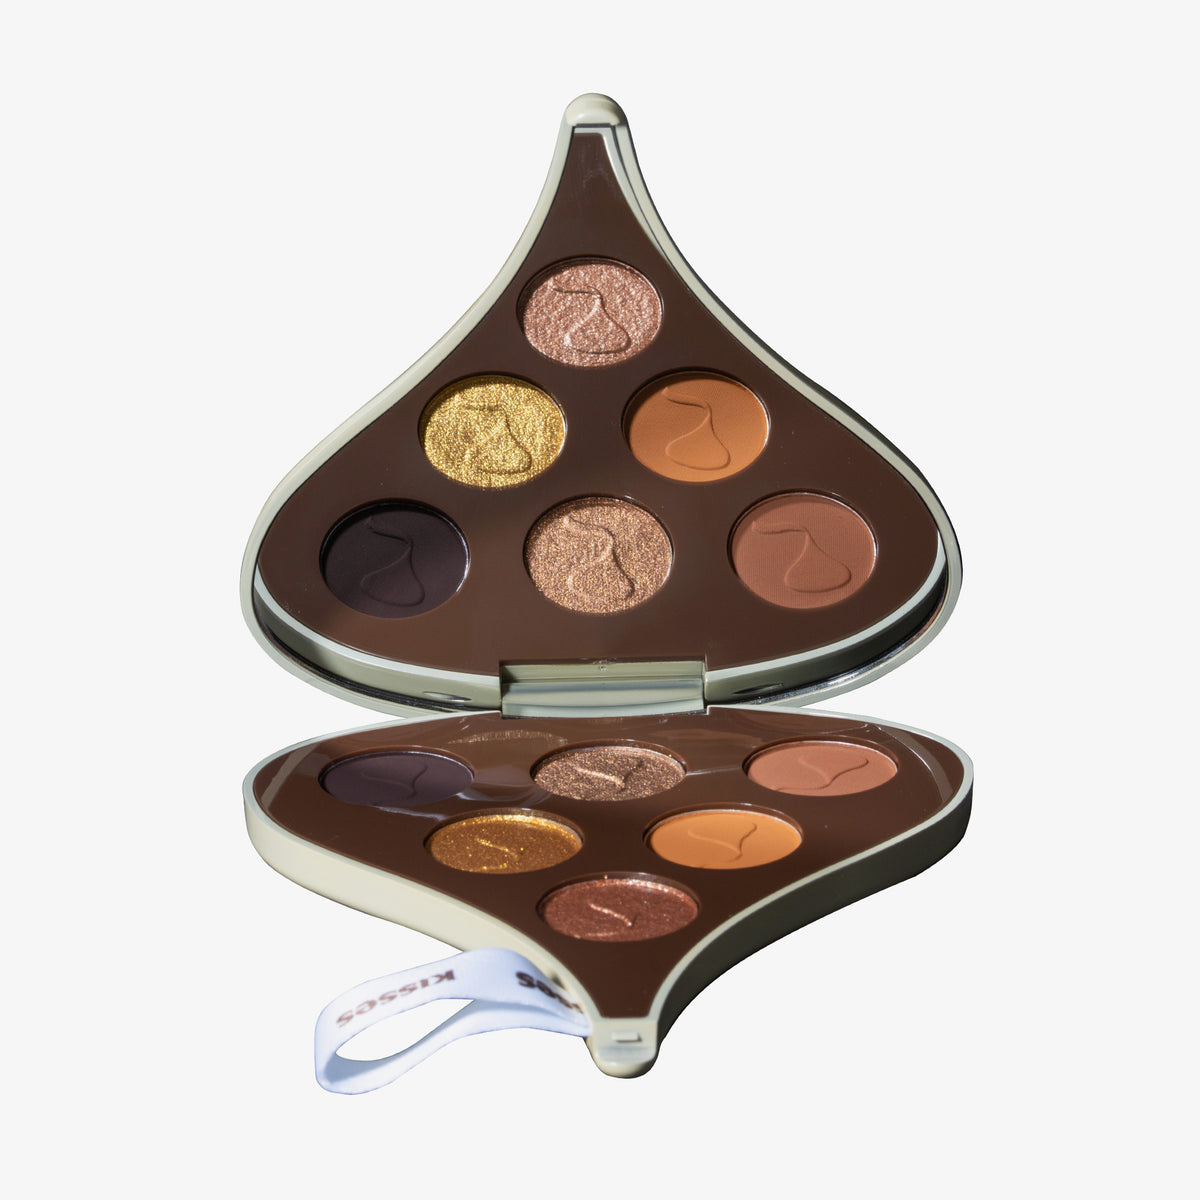 Glamlite Cosmetics | Hershey's Kisses x Glamlite Milk Chocolate with Almonds Palette